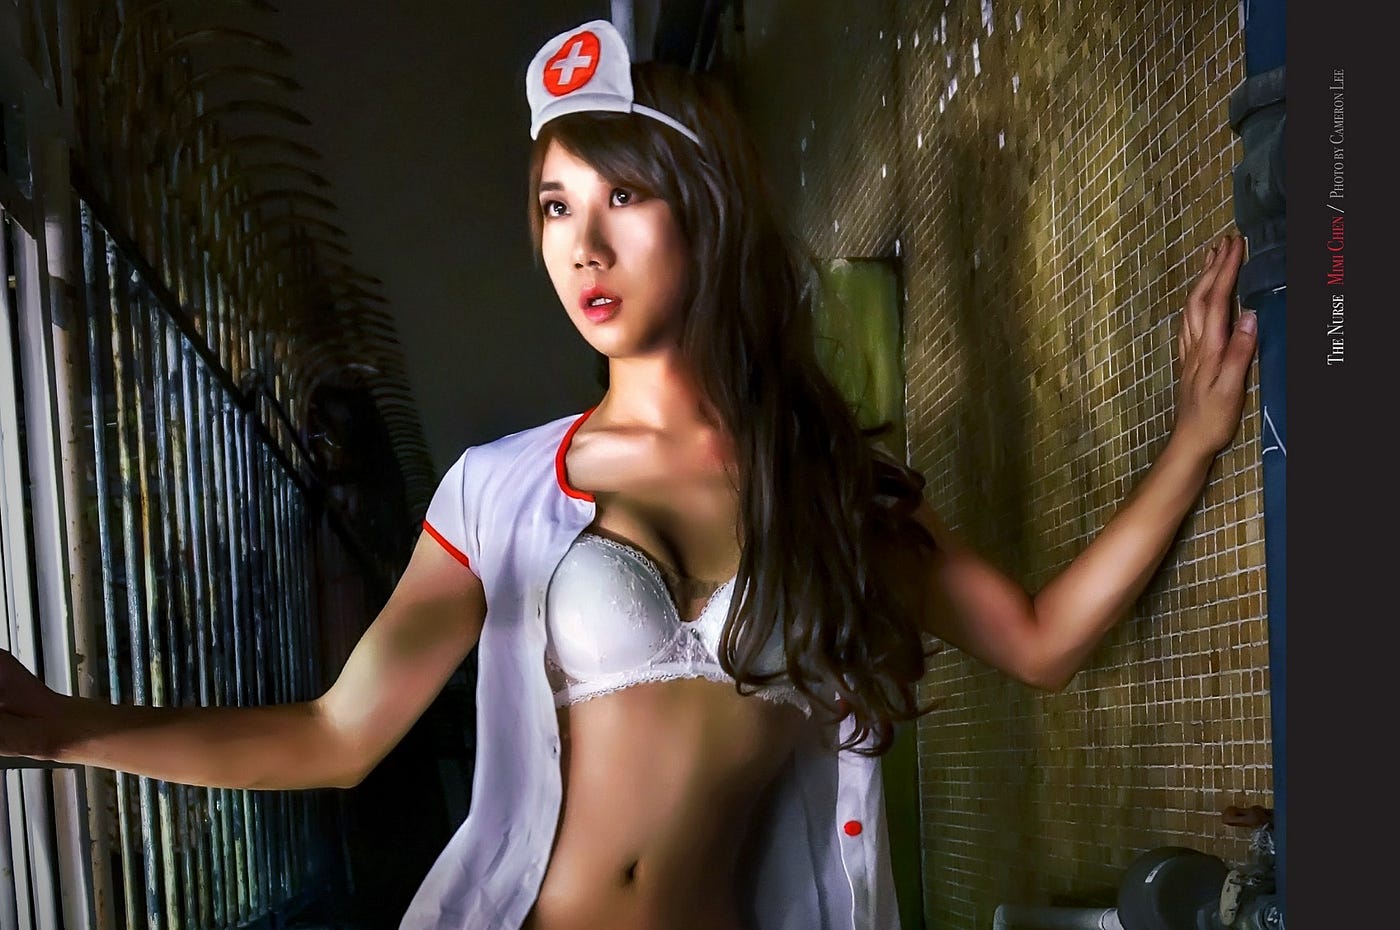 sexy nurse | professional woman | nursing career | Medium